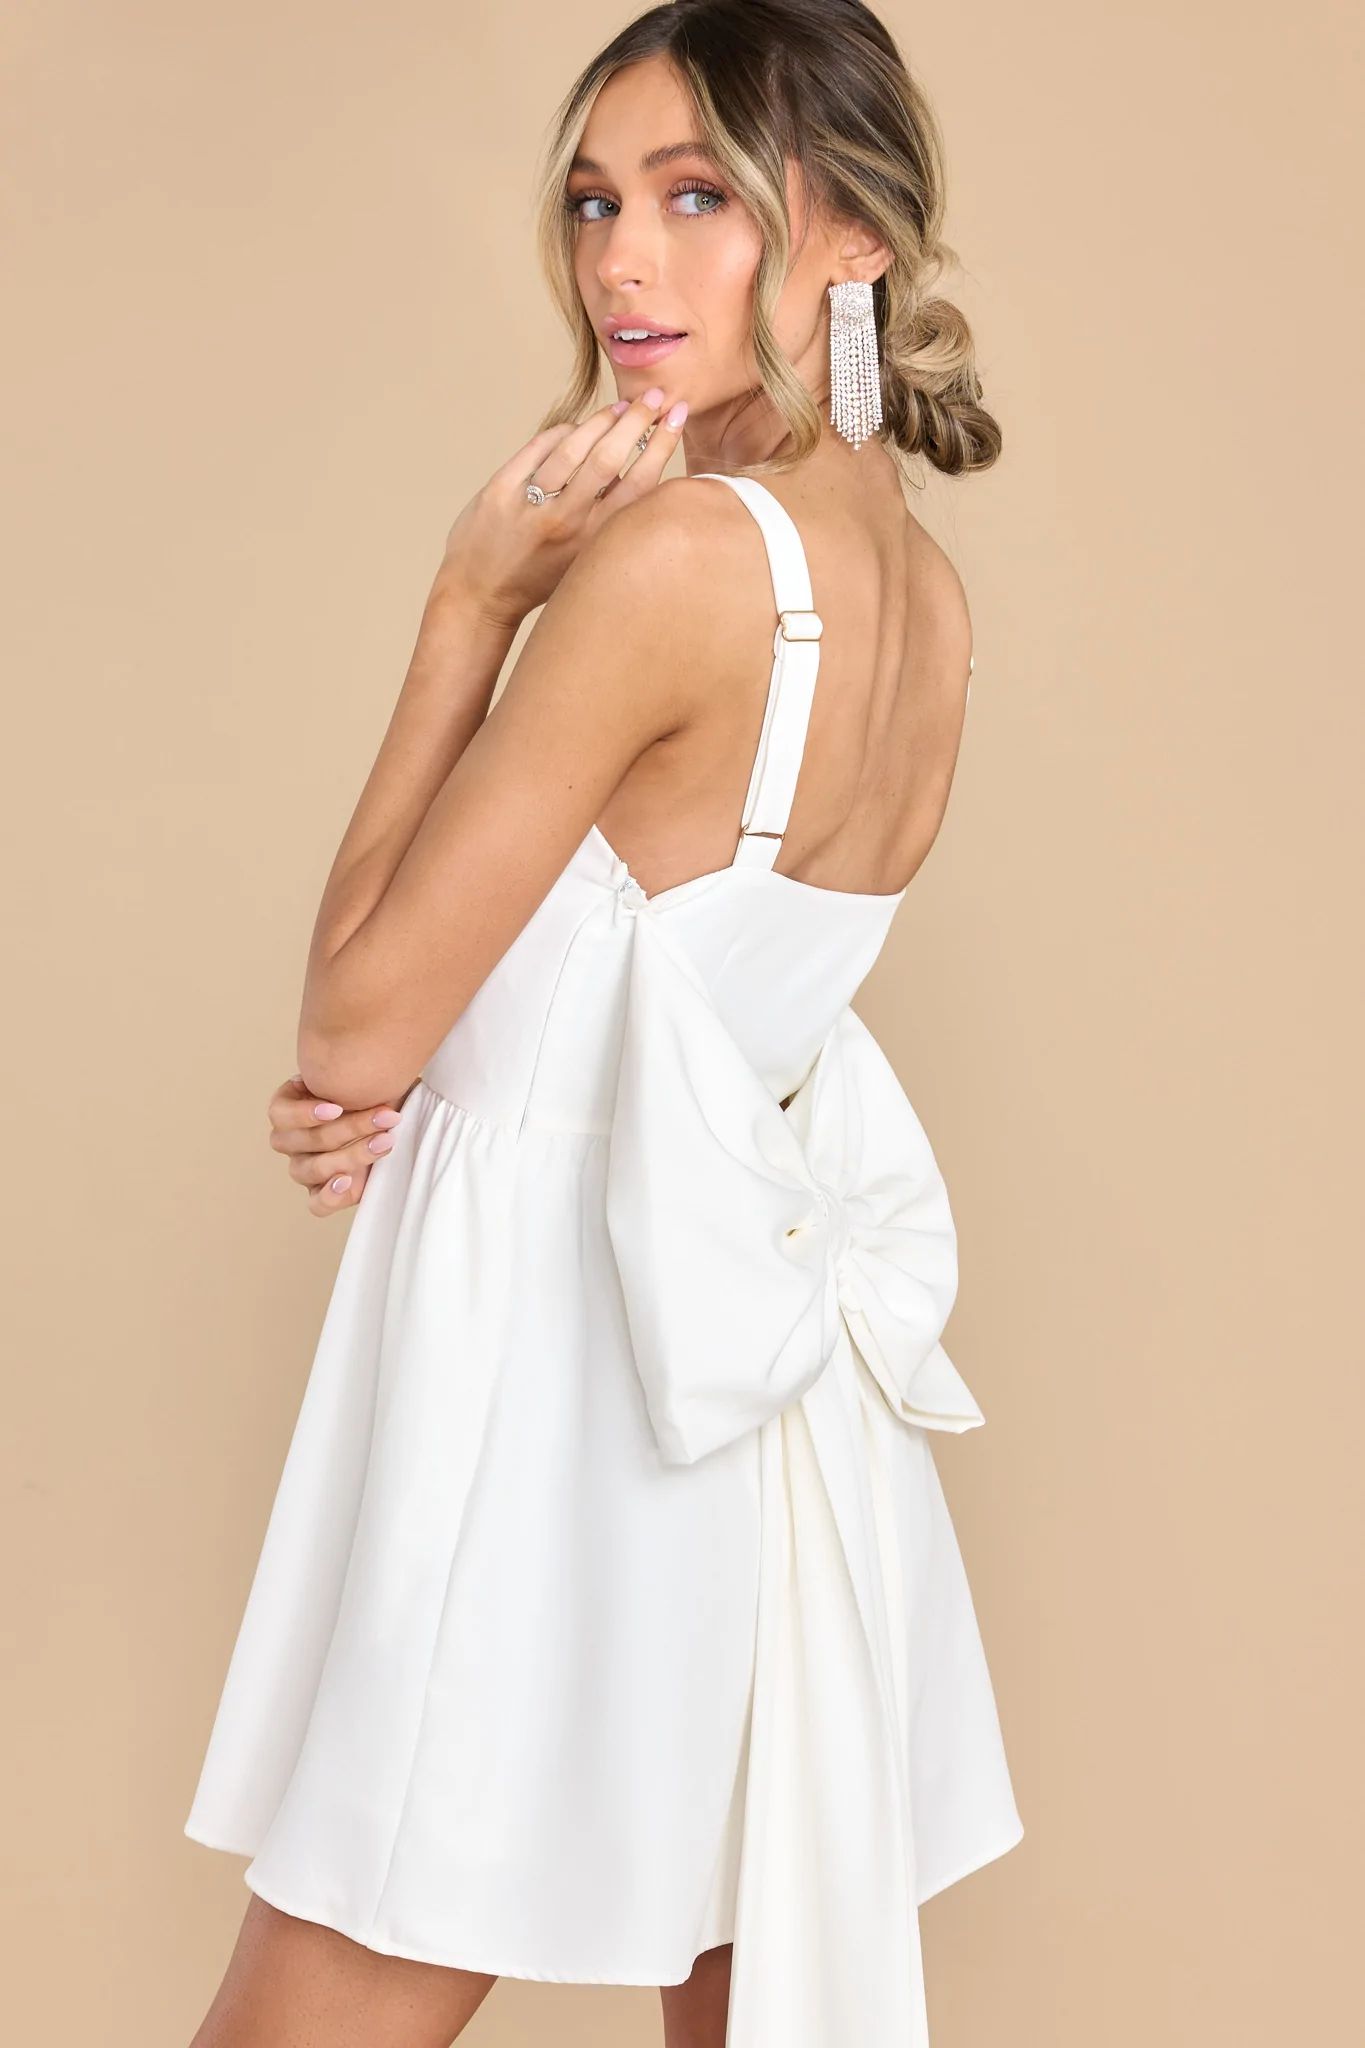 Elegant Essence White Dress | Red Dress 